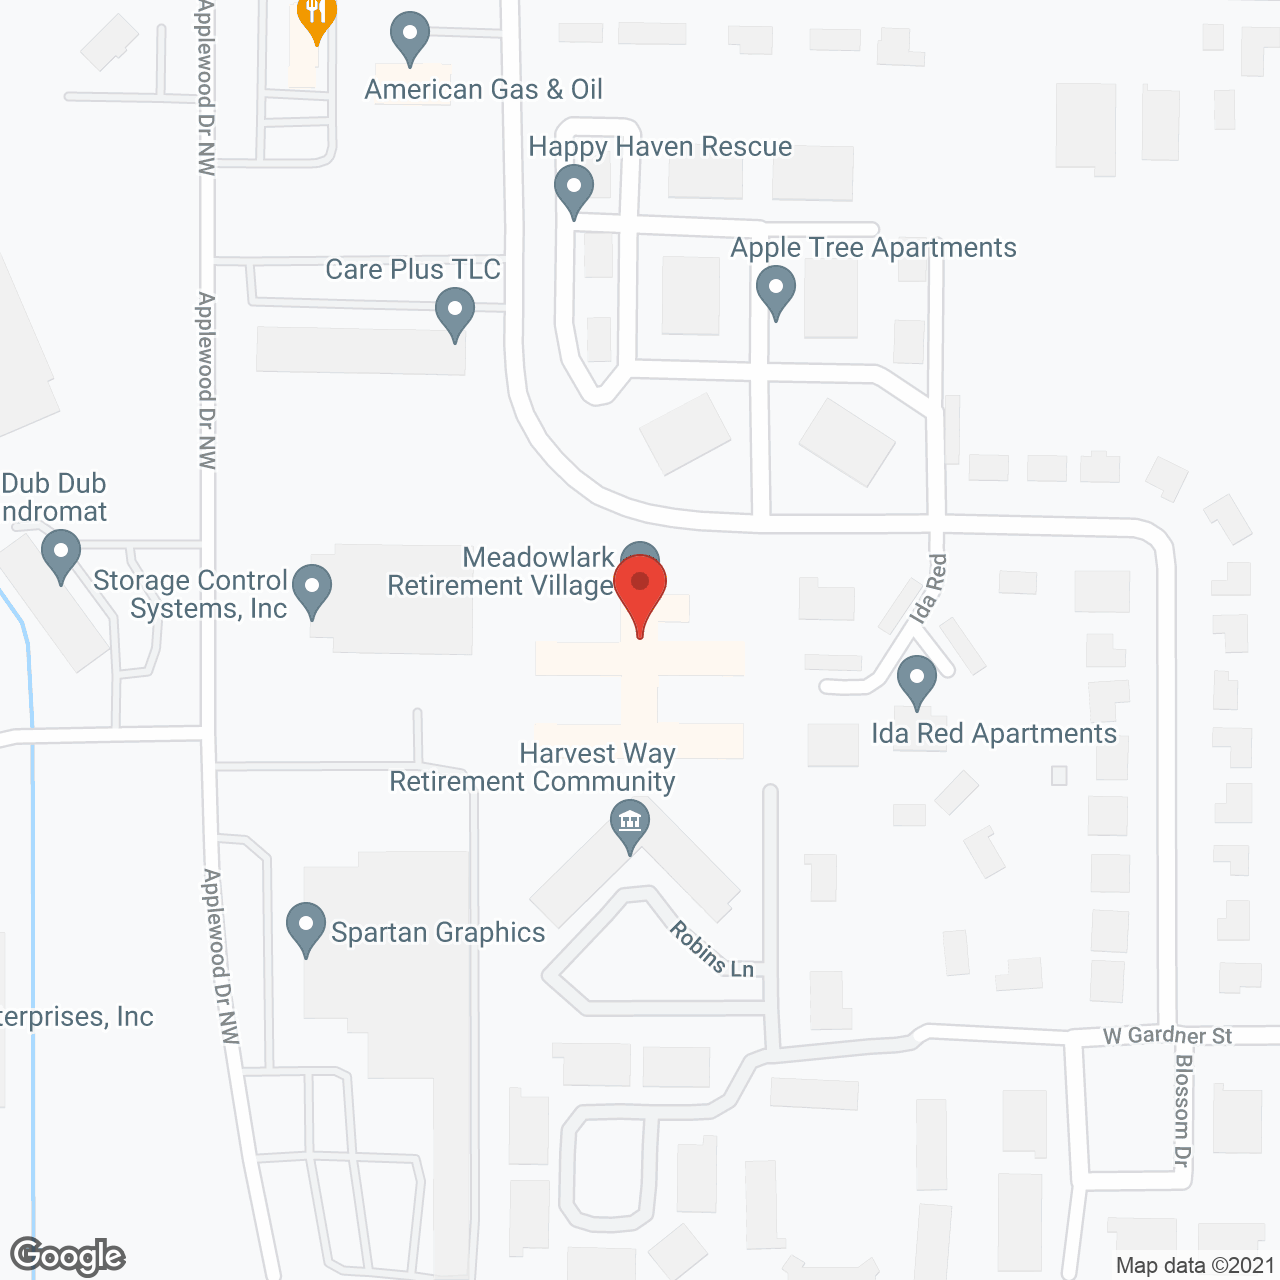 Meadowlark Retirement Village in google map